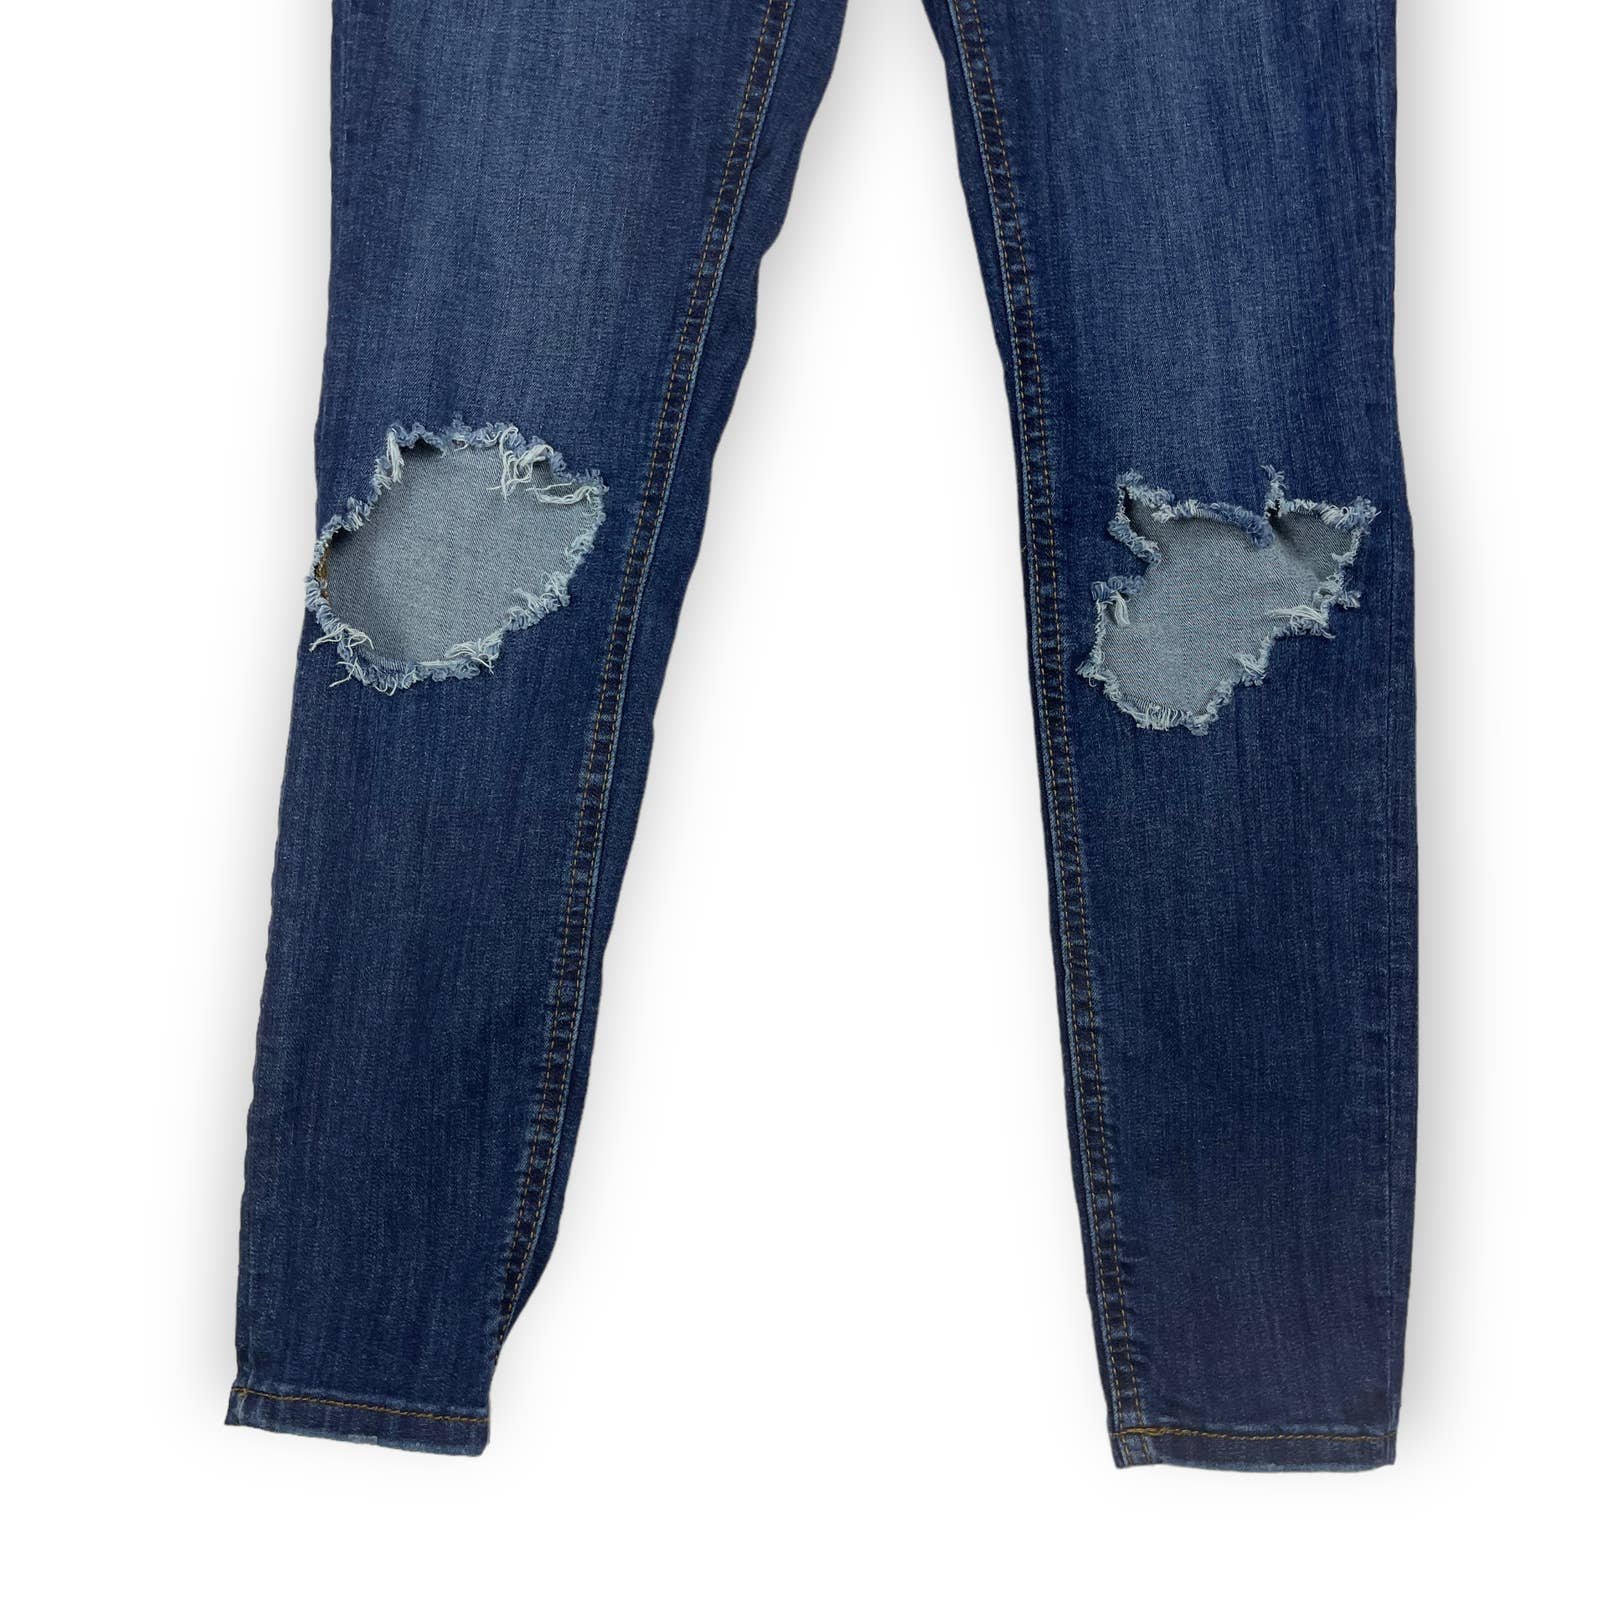 large discount Free People Skinny Jeans 28R onnrnWXM3 Wholesale